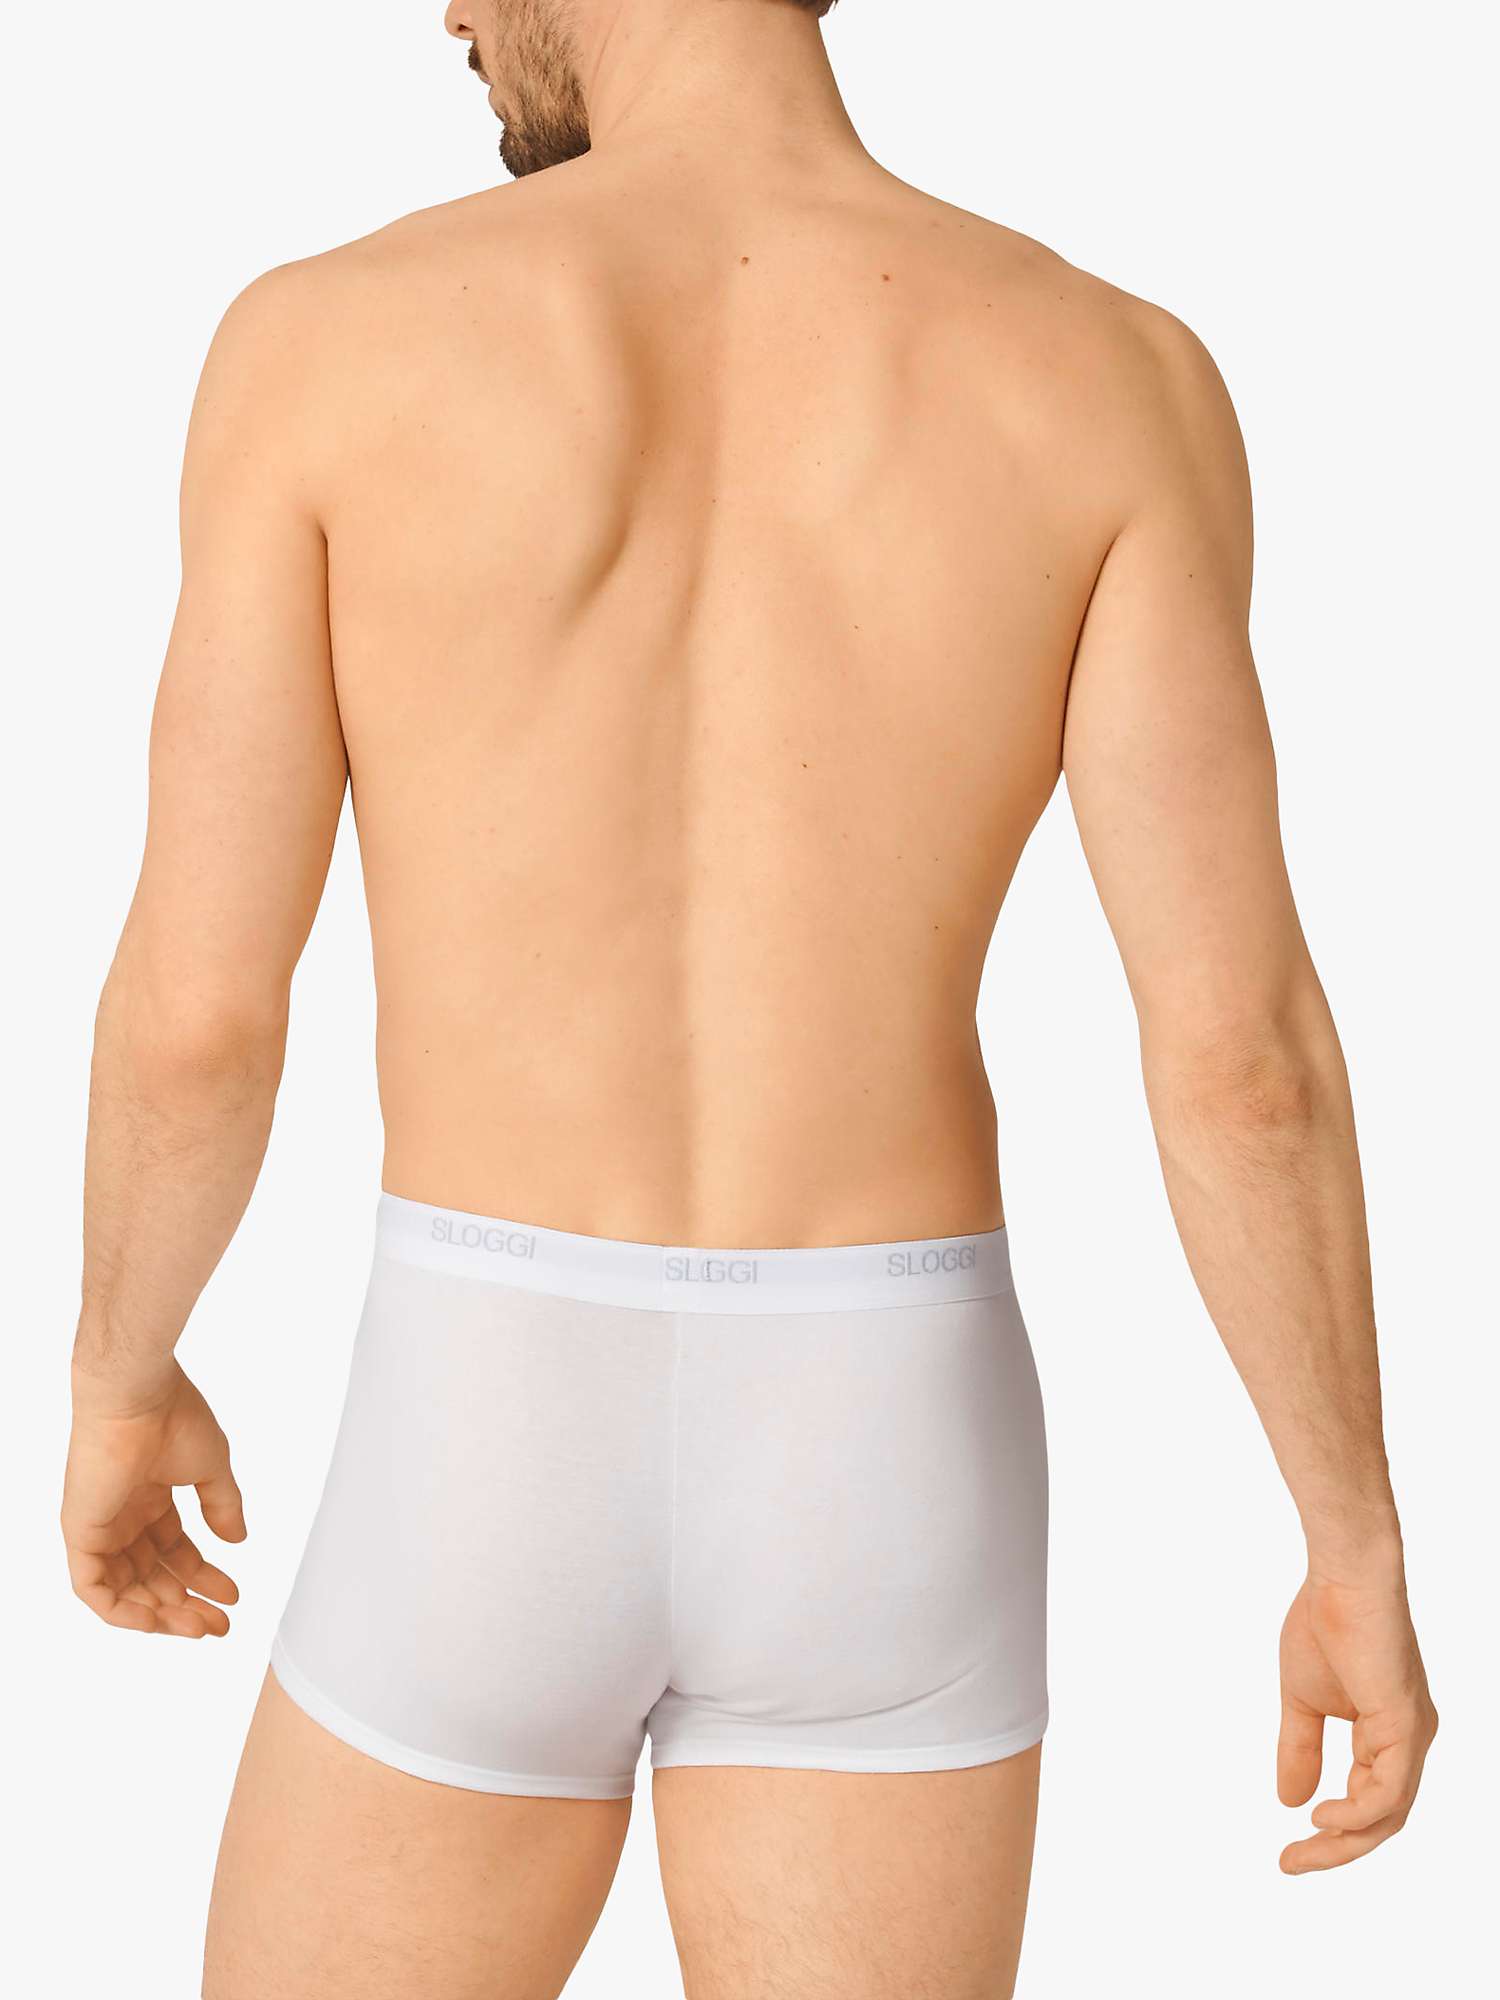 Buy sloggi Basic Shorts, Pack of 2, White Online at johnlewis.com